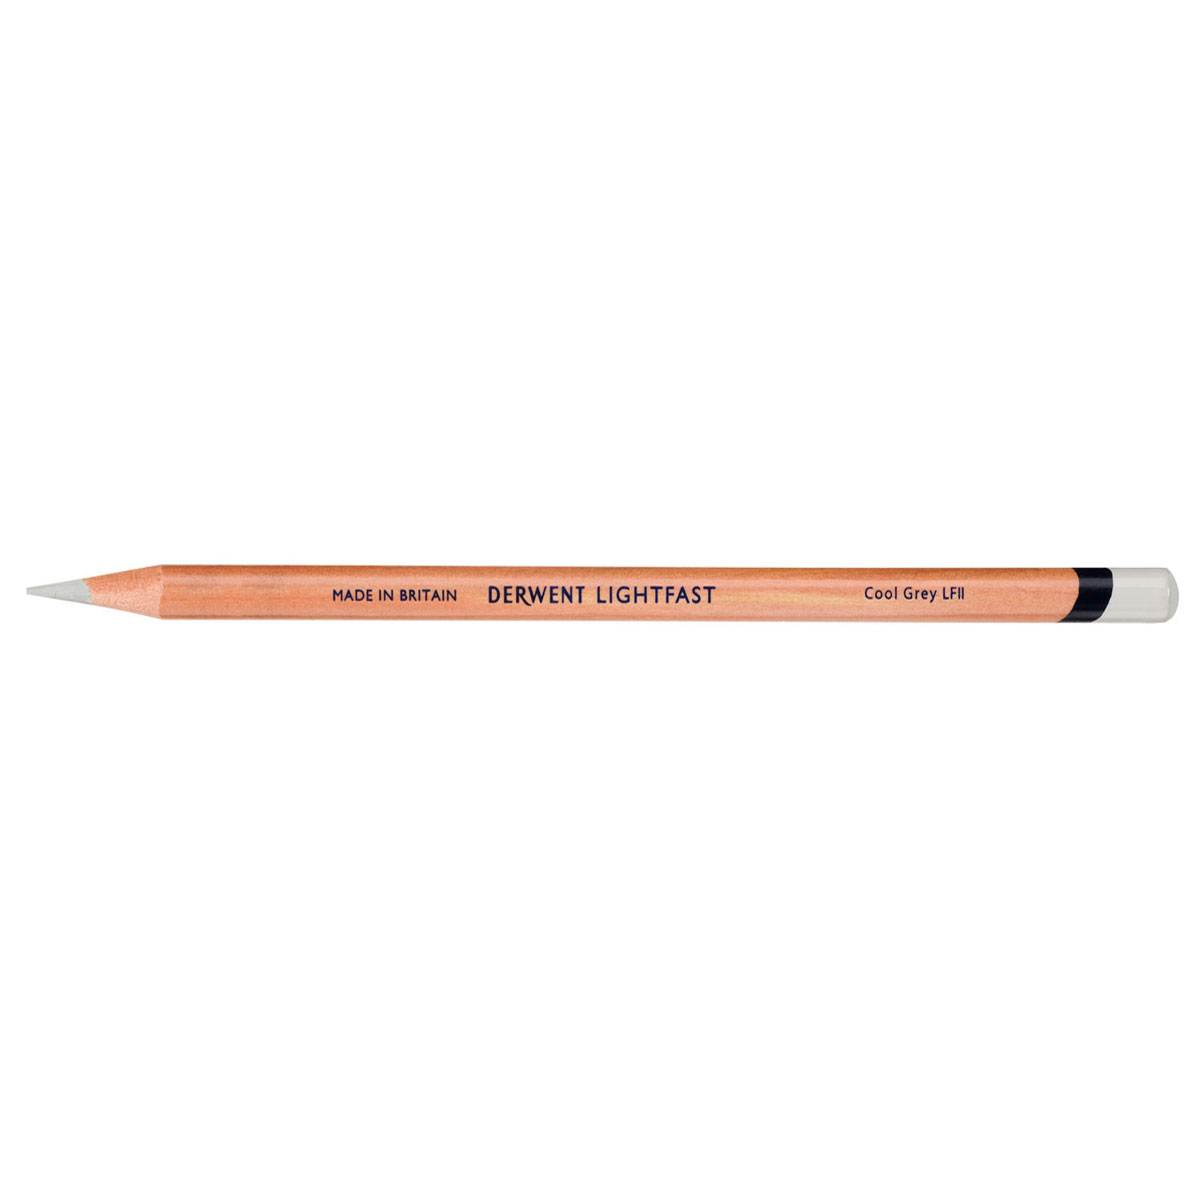 NEW Derwent Lightfast Pencil Colour: Cool Grey